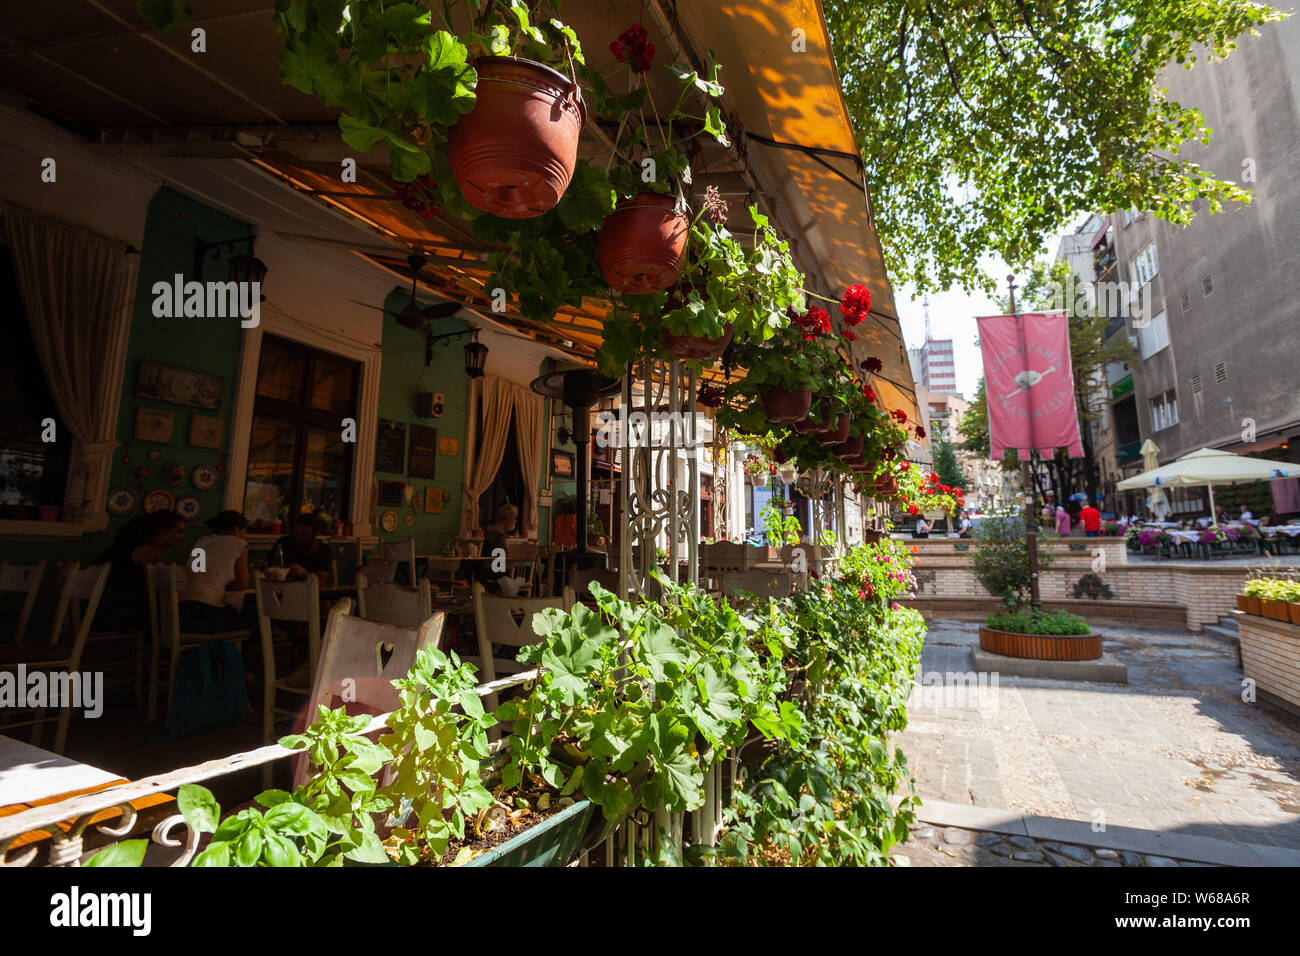 BELGRADE, SERBIA – JULY 07: Visitors enjoy cafes in Skadarlija, Belgrade's bohemian quarter on 07 July 2019 in Belgrade, Serbia. Stock Photo